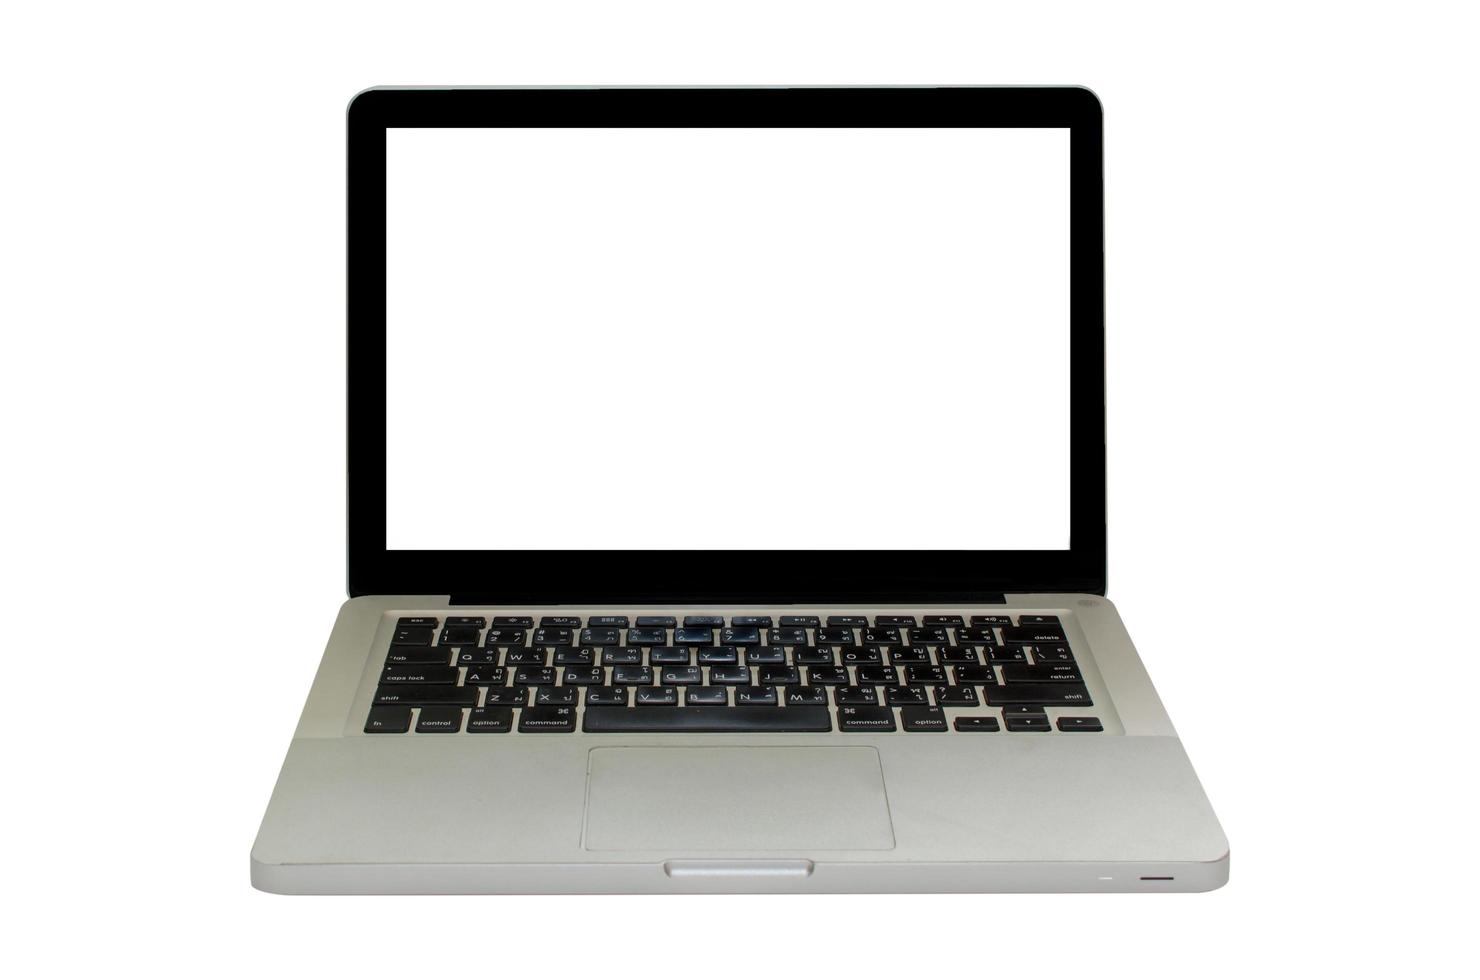 pantalla de laptop en blanco foto